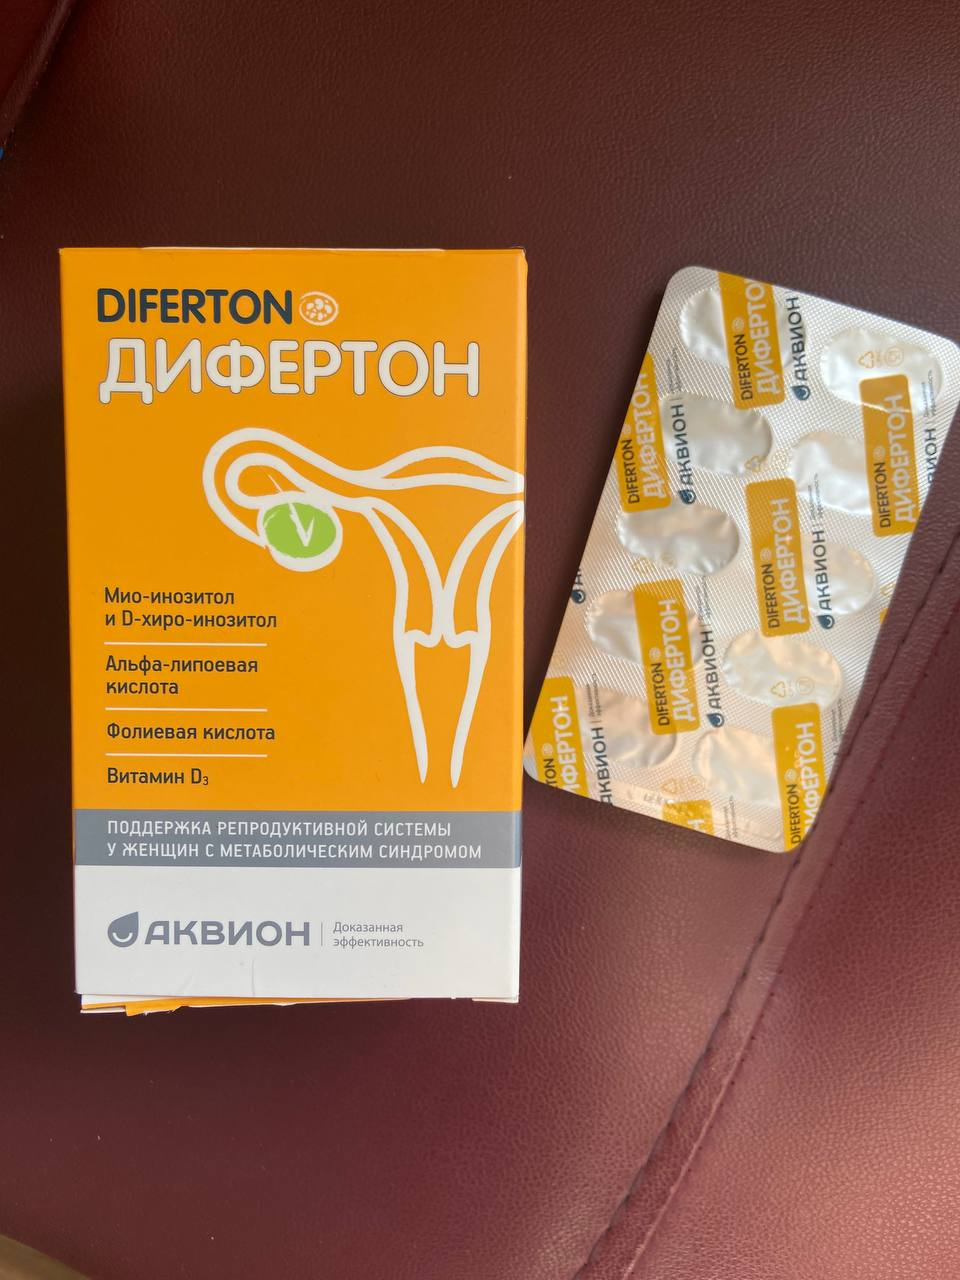 Дифертон - Инсулин - тестостерон- снова инсулин и так по кругу!